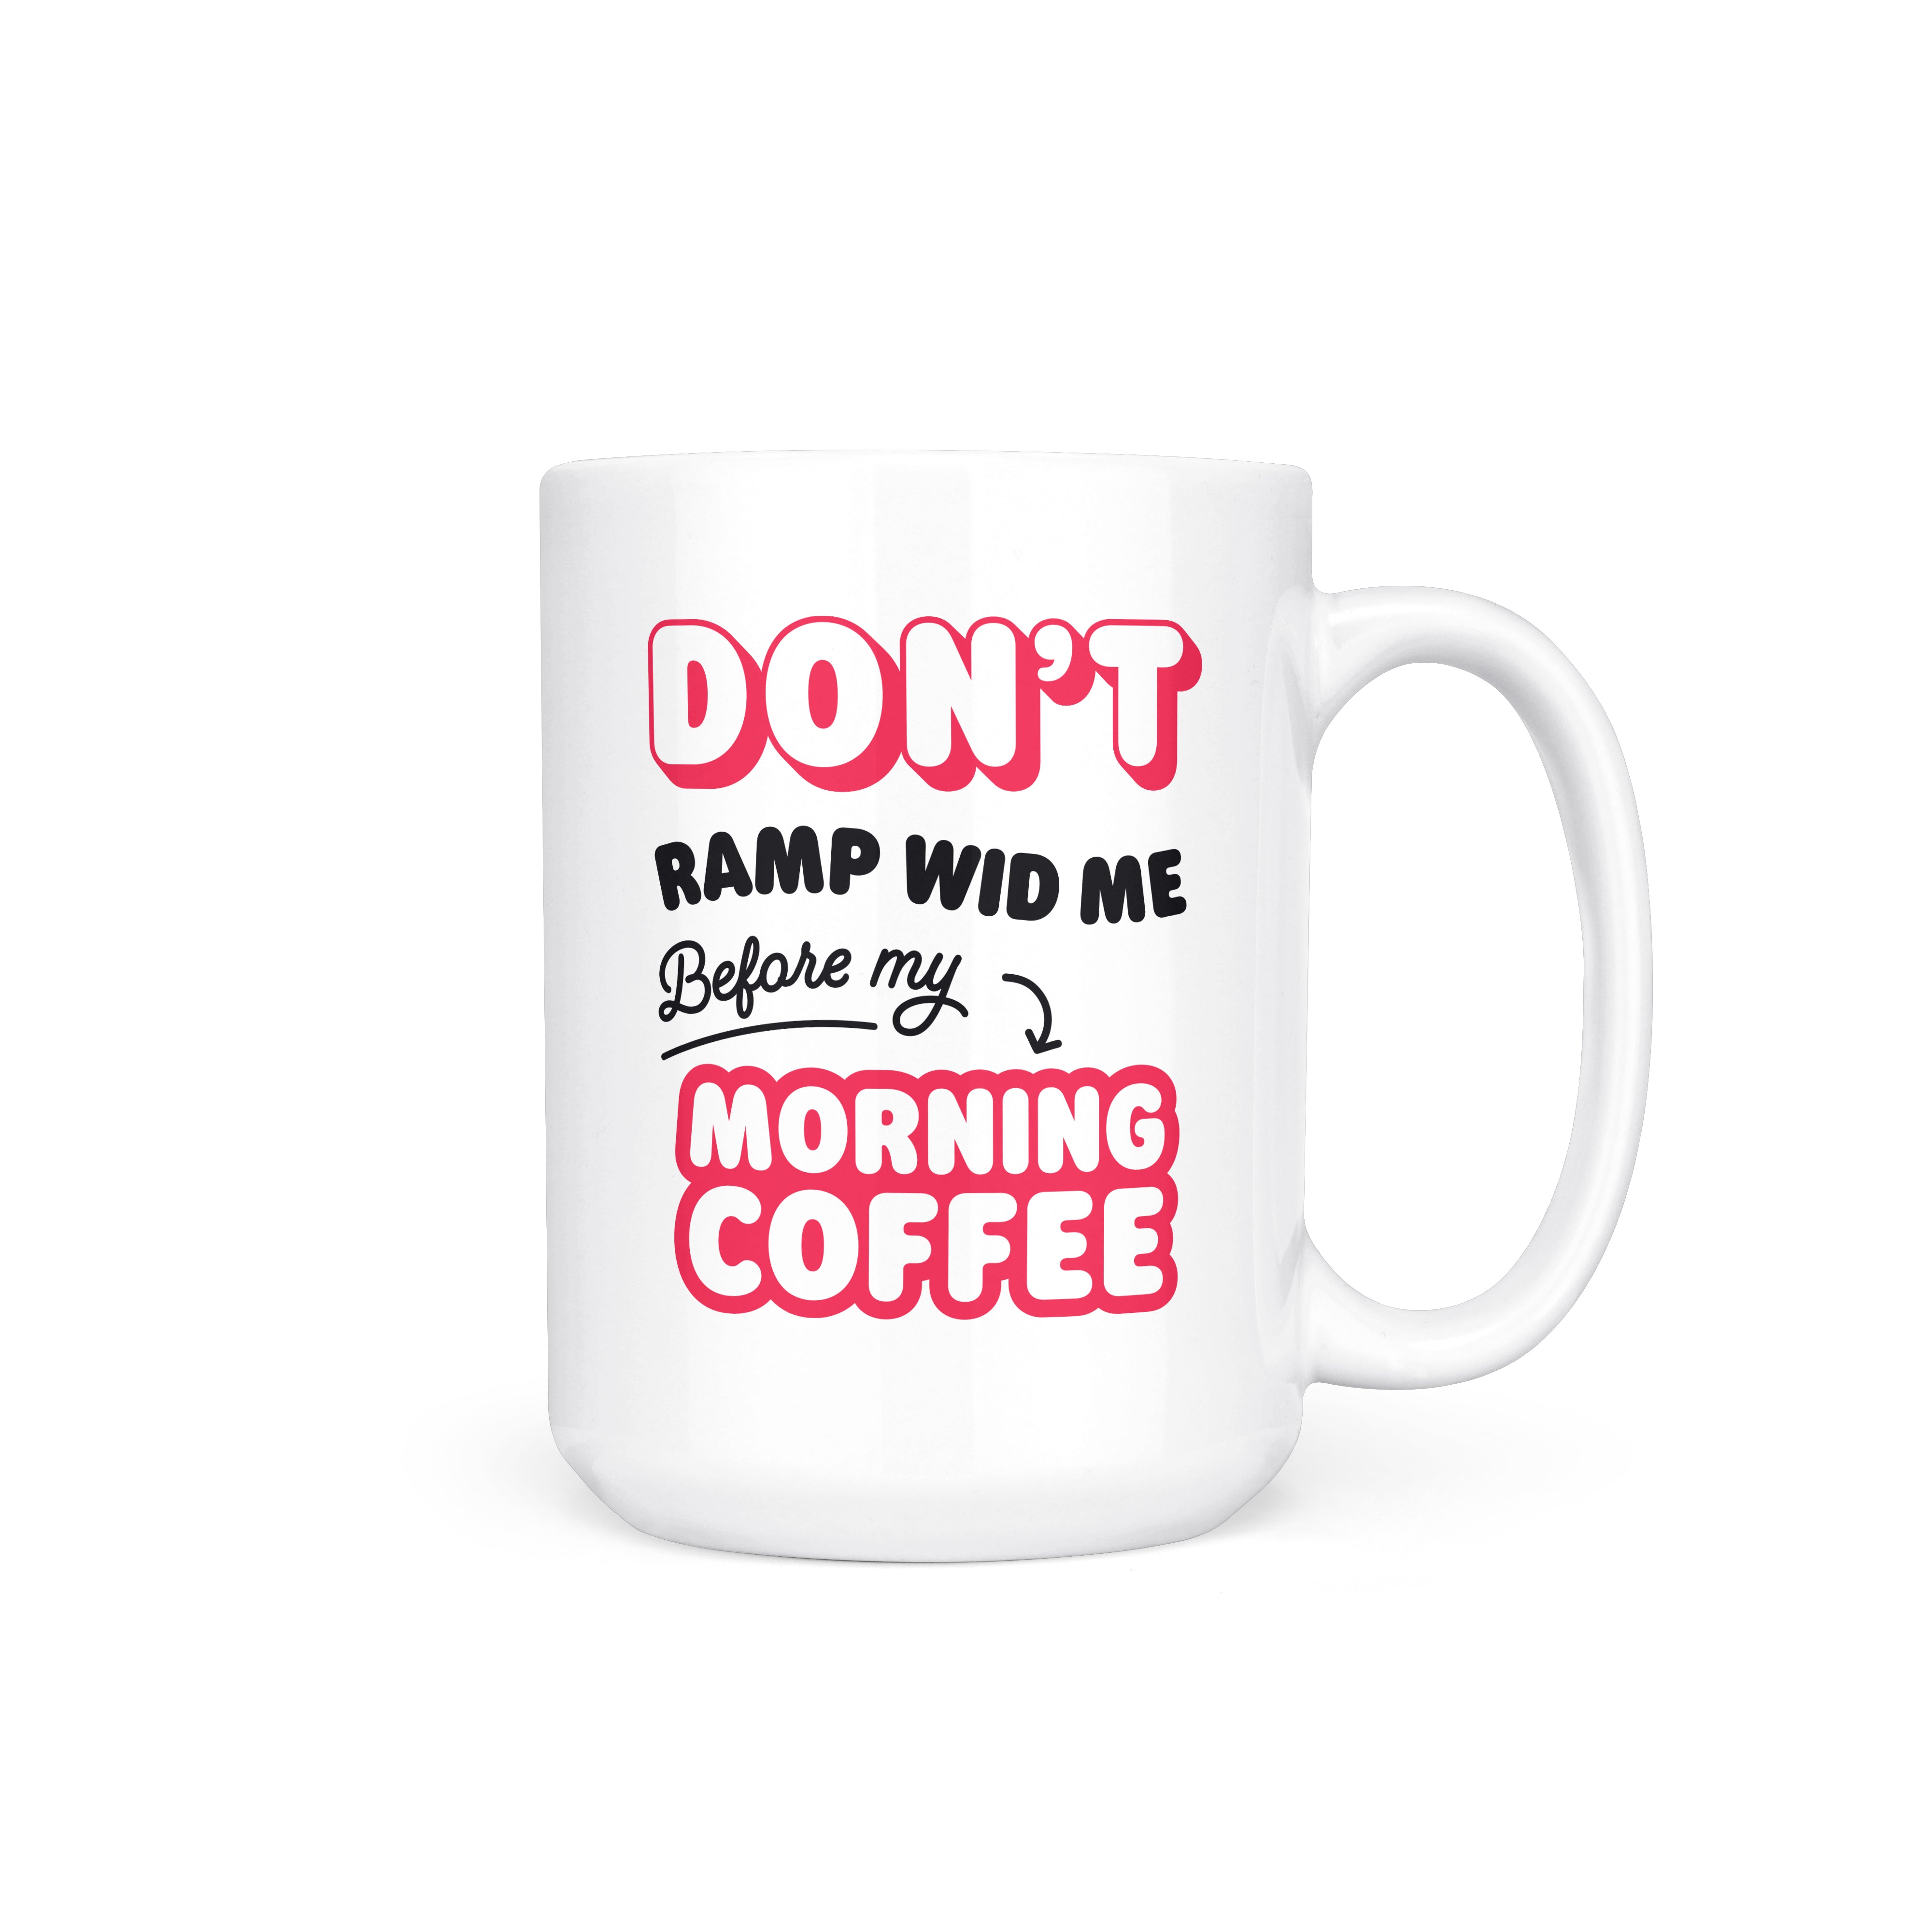 Don't Ramp Coffee Mug